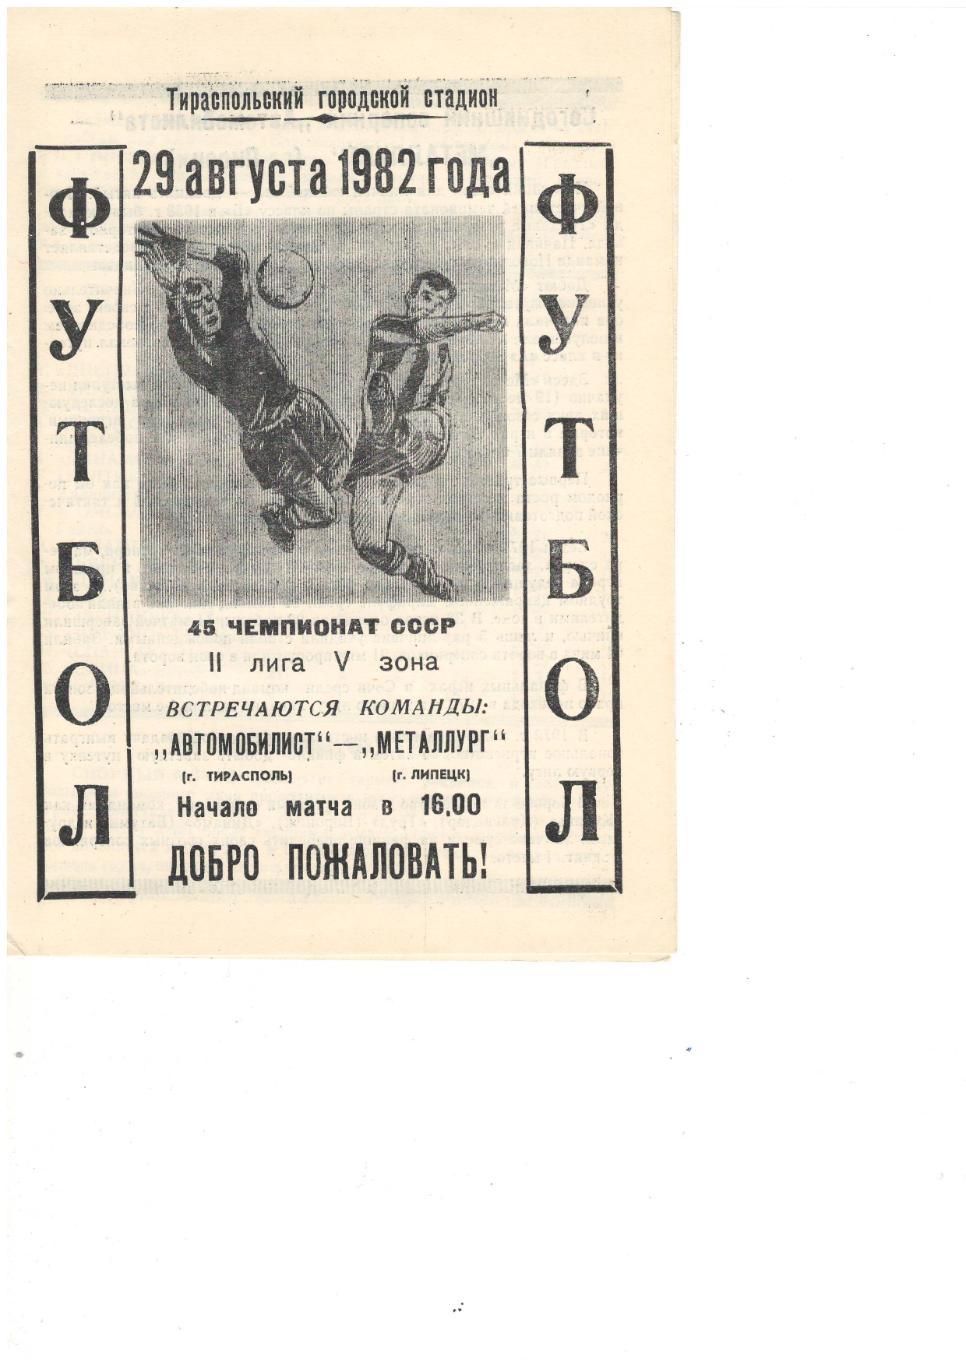 Автомобилист Тирасполь - Металлург Липецк 29.08.1982